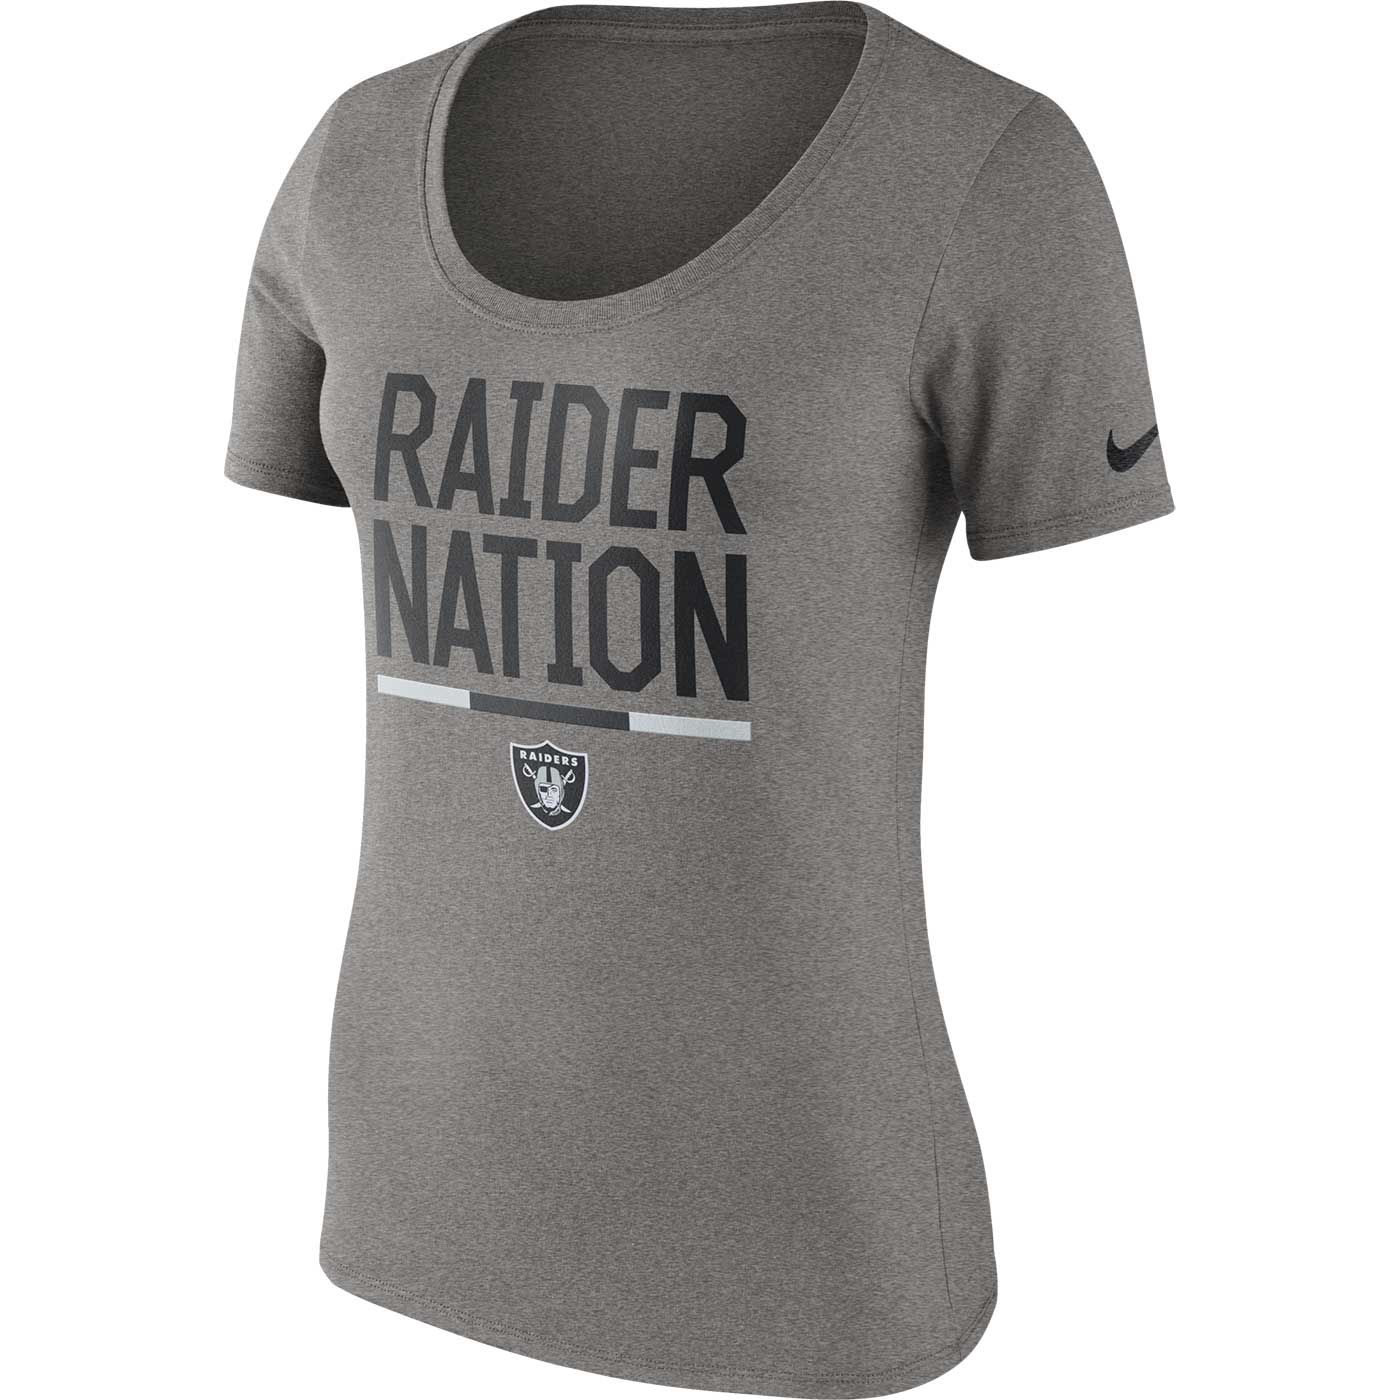 Raiders 4 Life. #RaiderNation  Raiders shirt, Raiders t shirt